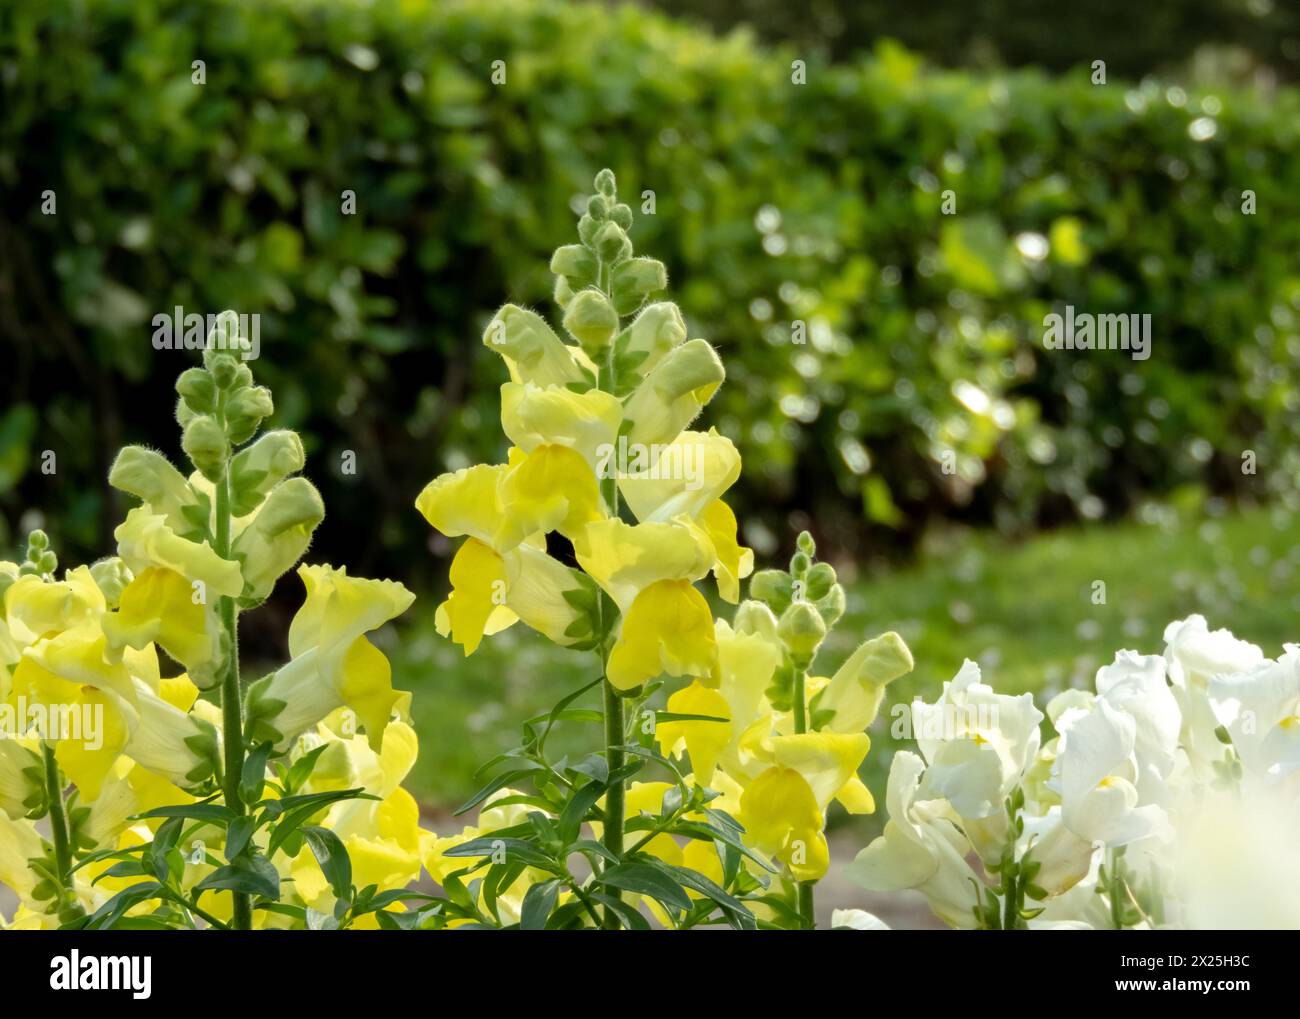 Antirrhinum majus flowering plant in the garden. Common snapdragon bright yellow flowers. Spike inflorescence. Stock Photo